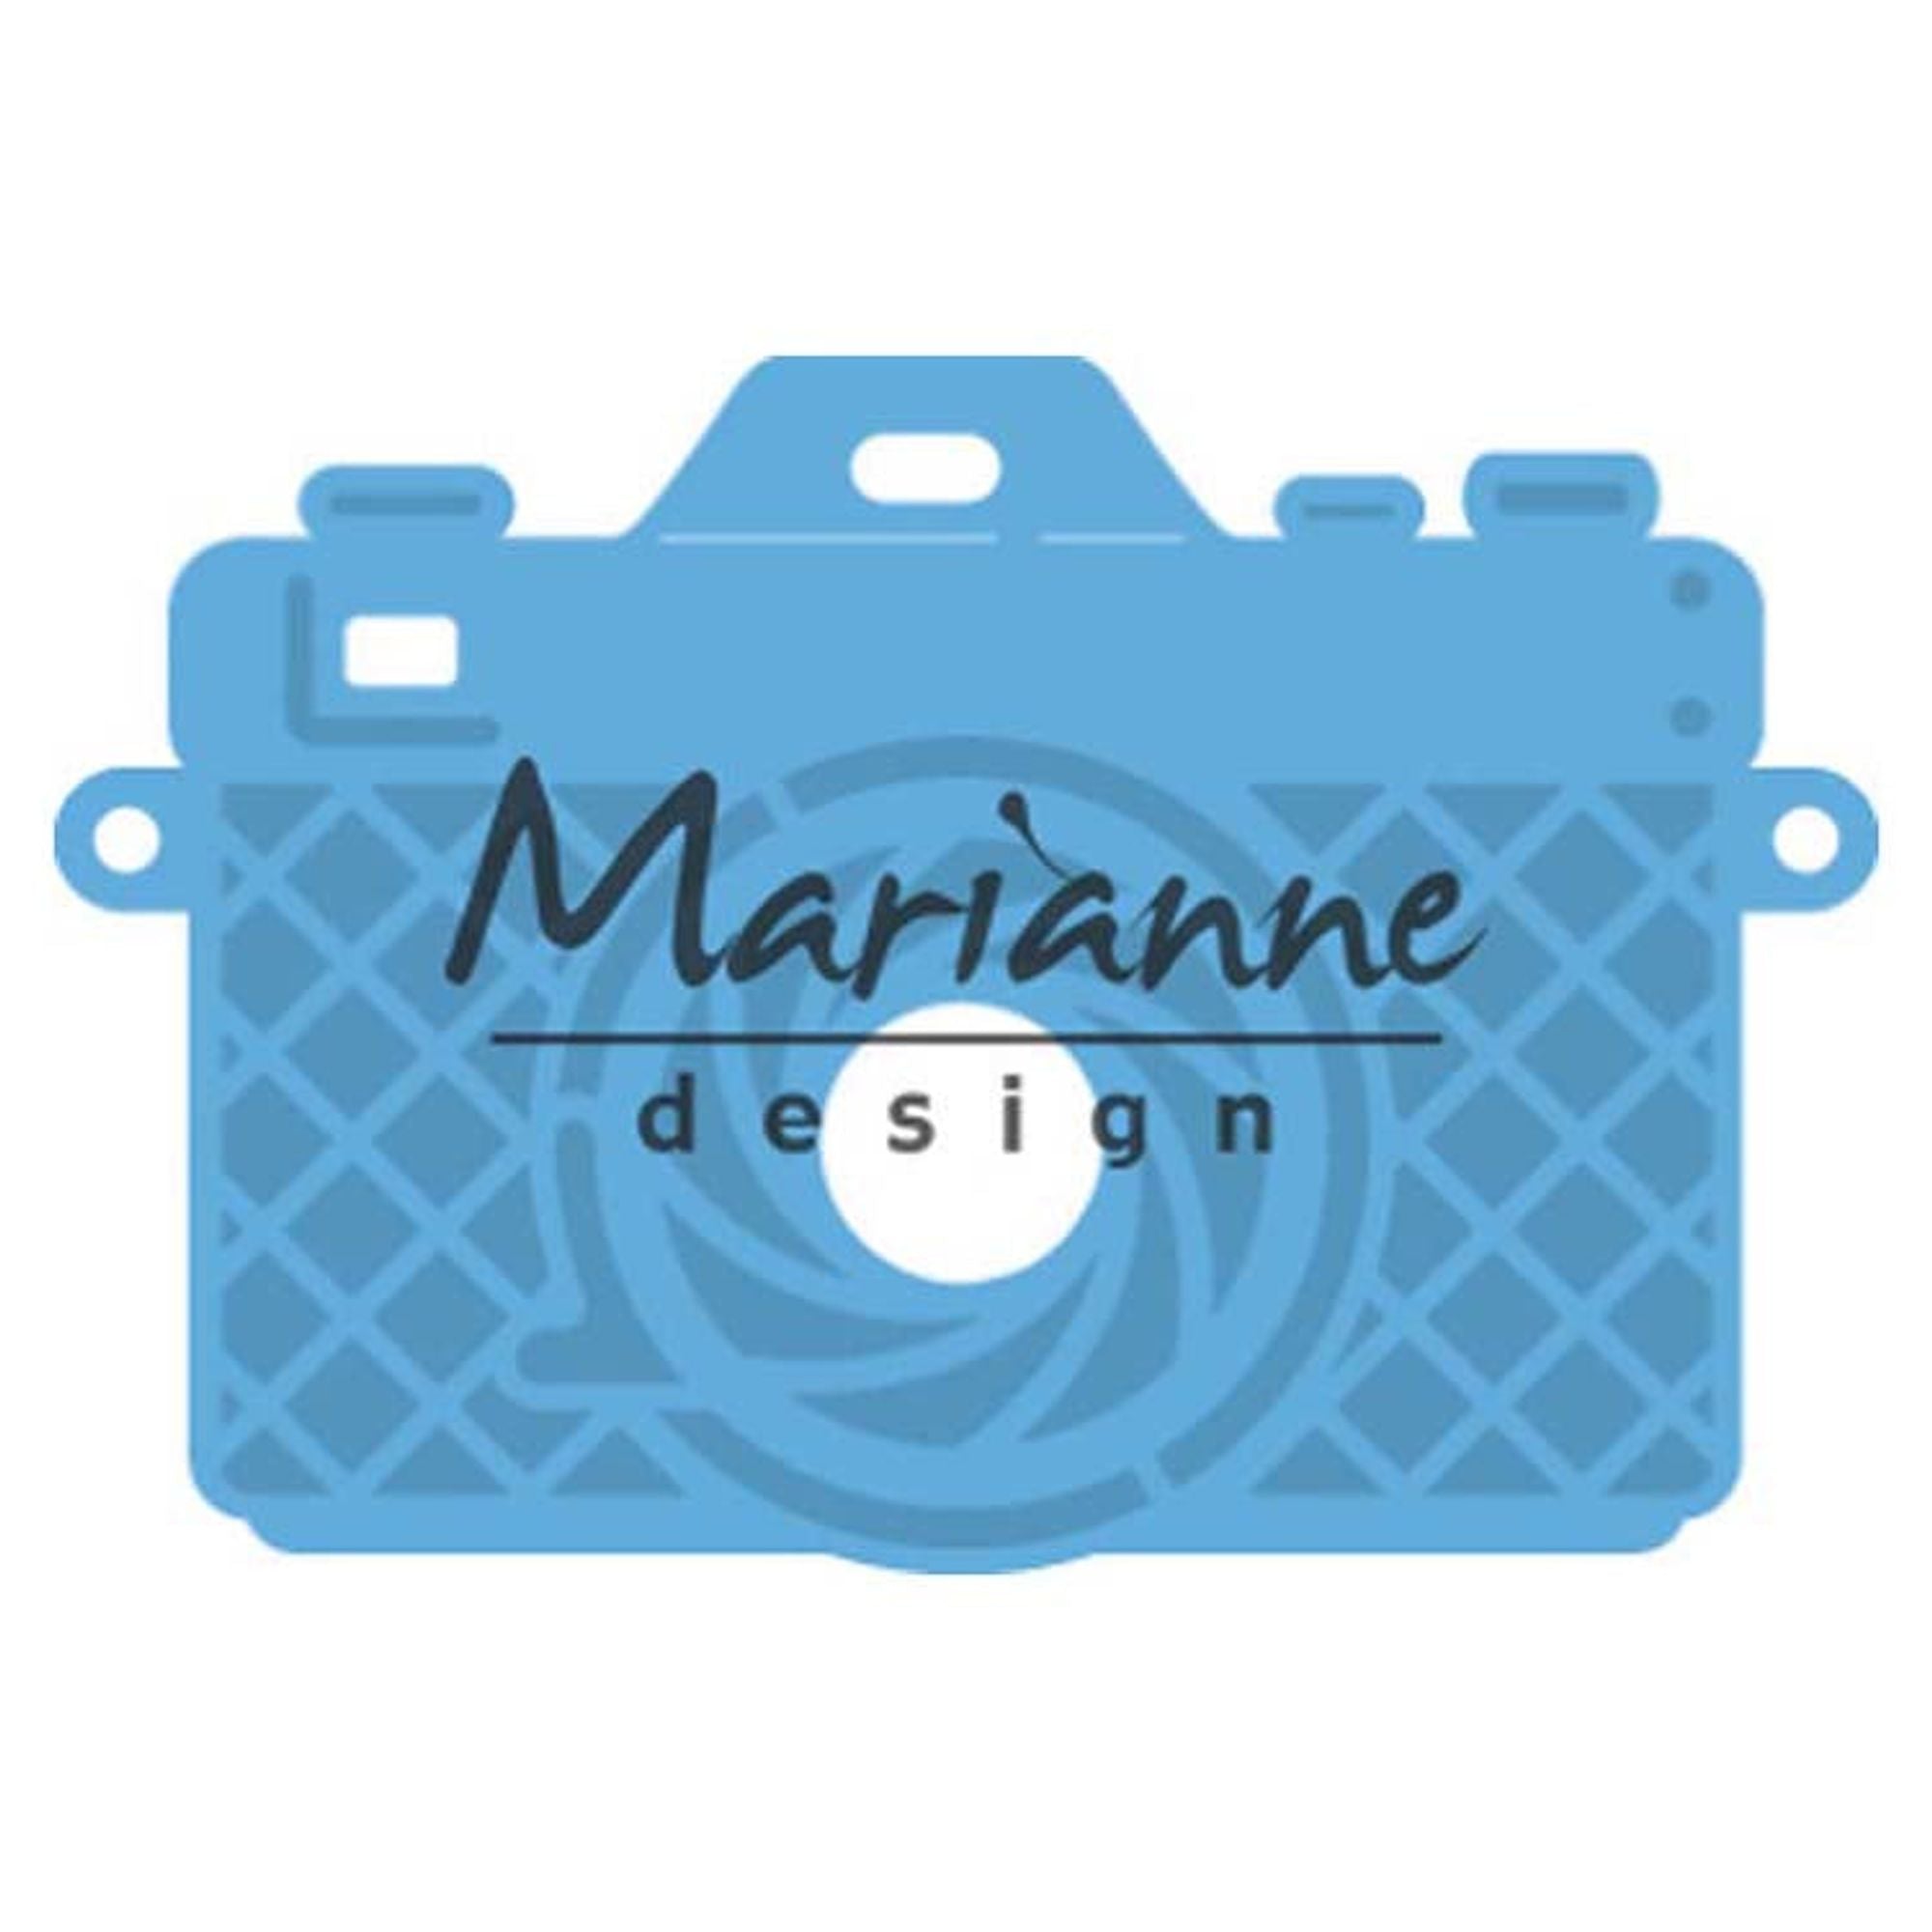 Marianne Design Creatables Photo camera